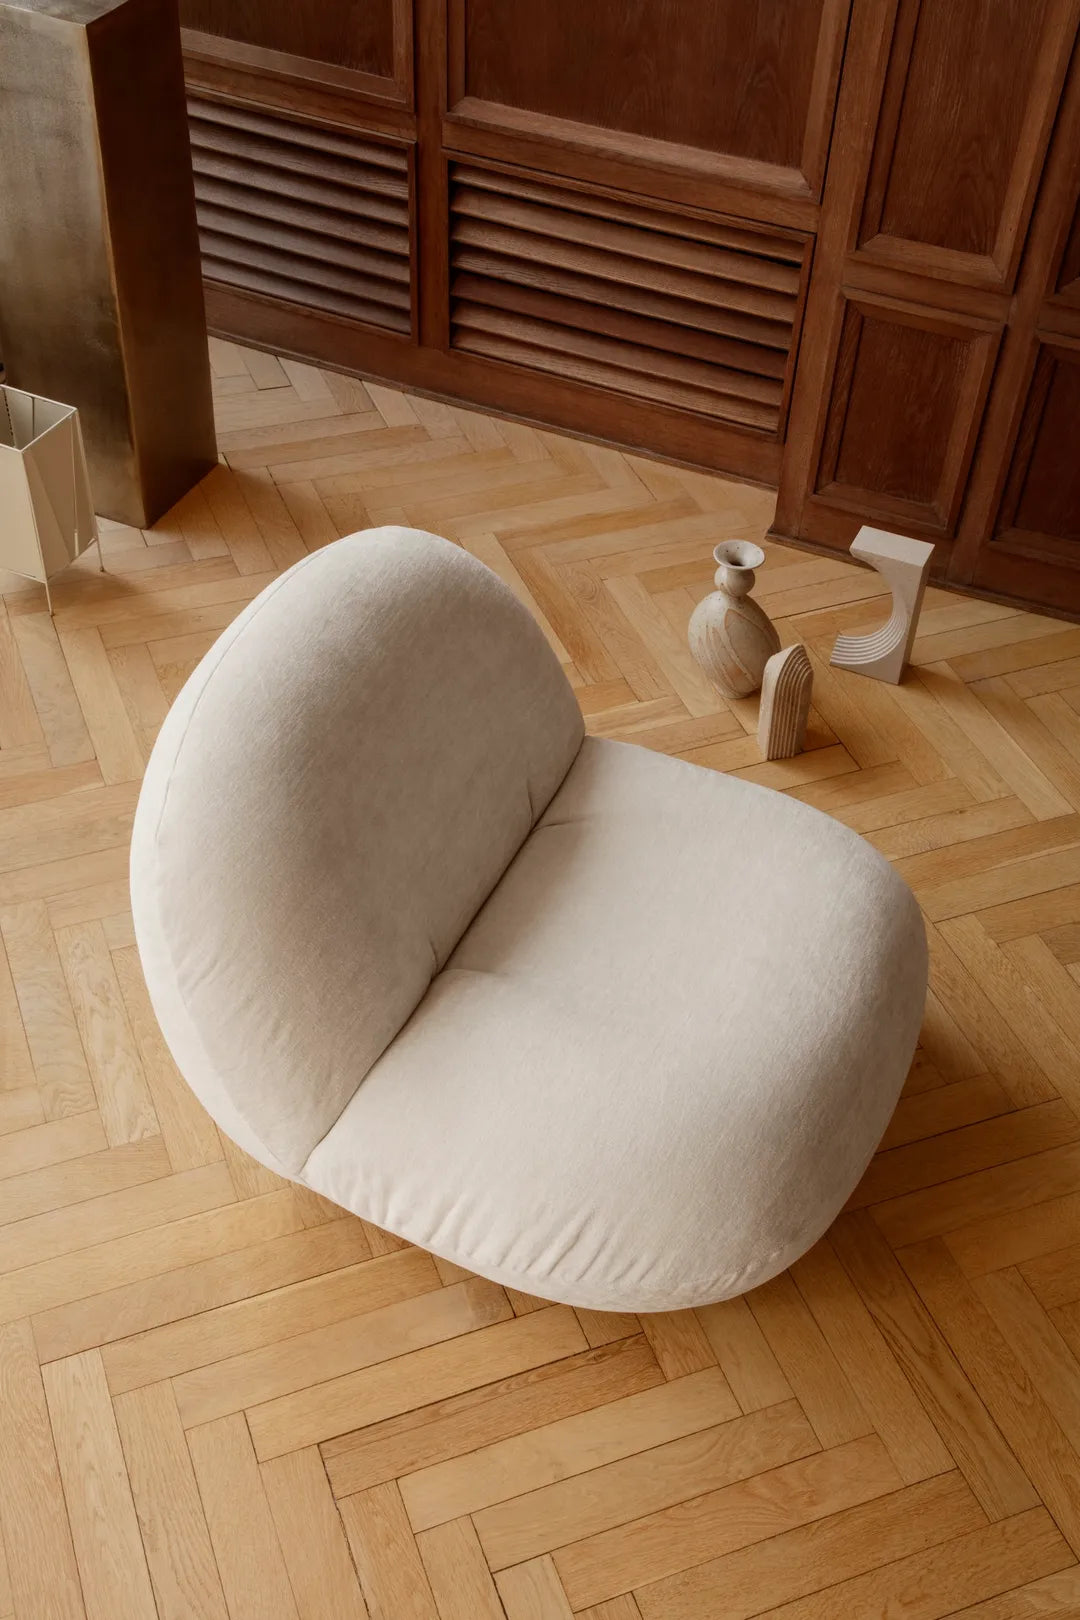 Pacha Lounge Chair by Gubi